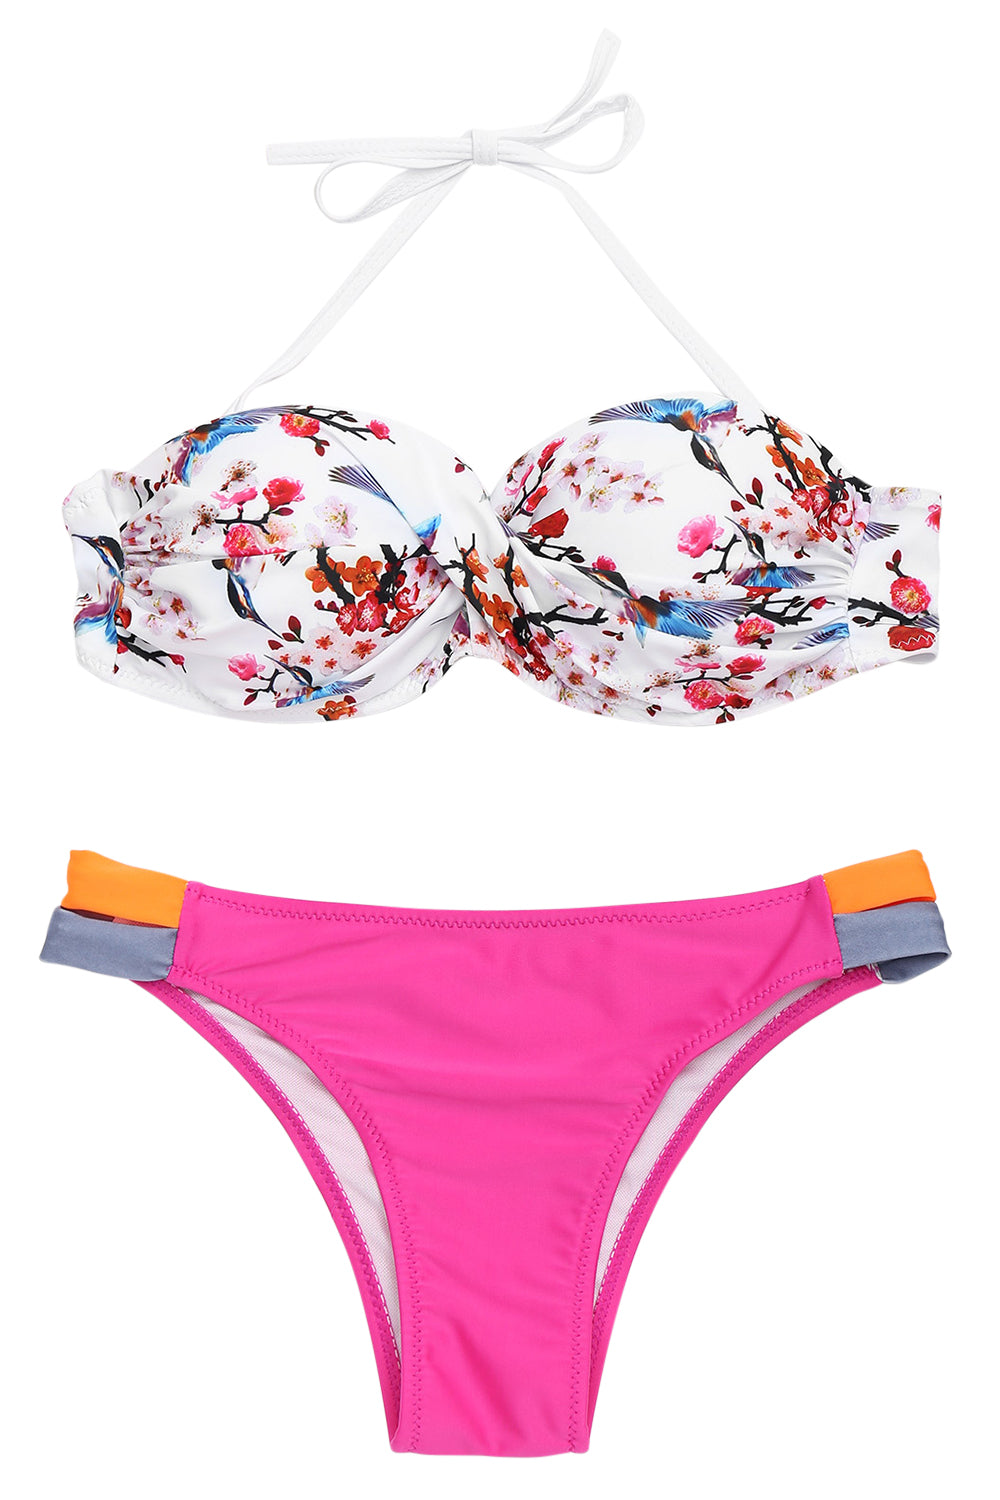 Iyasson Floral Printing Mix & Match Bikini Sets